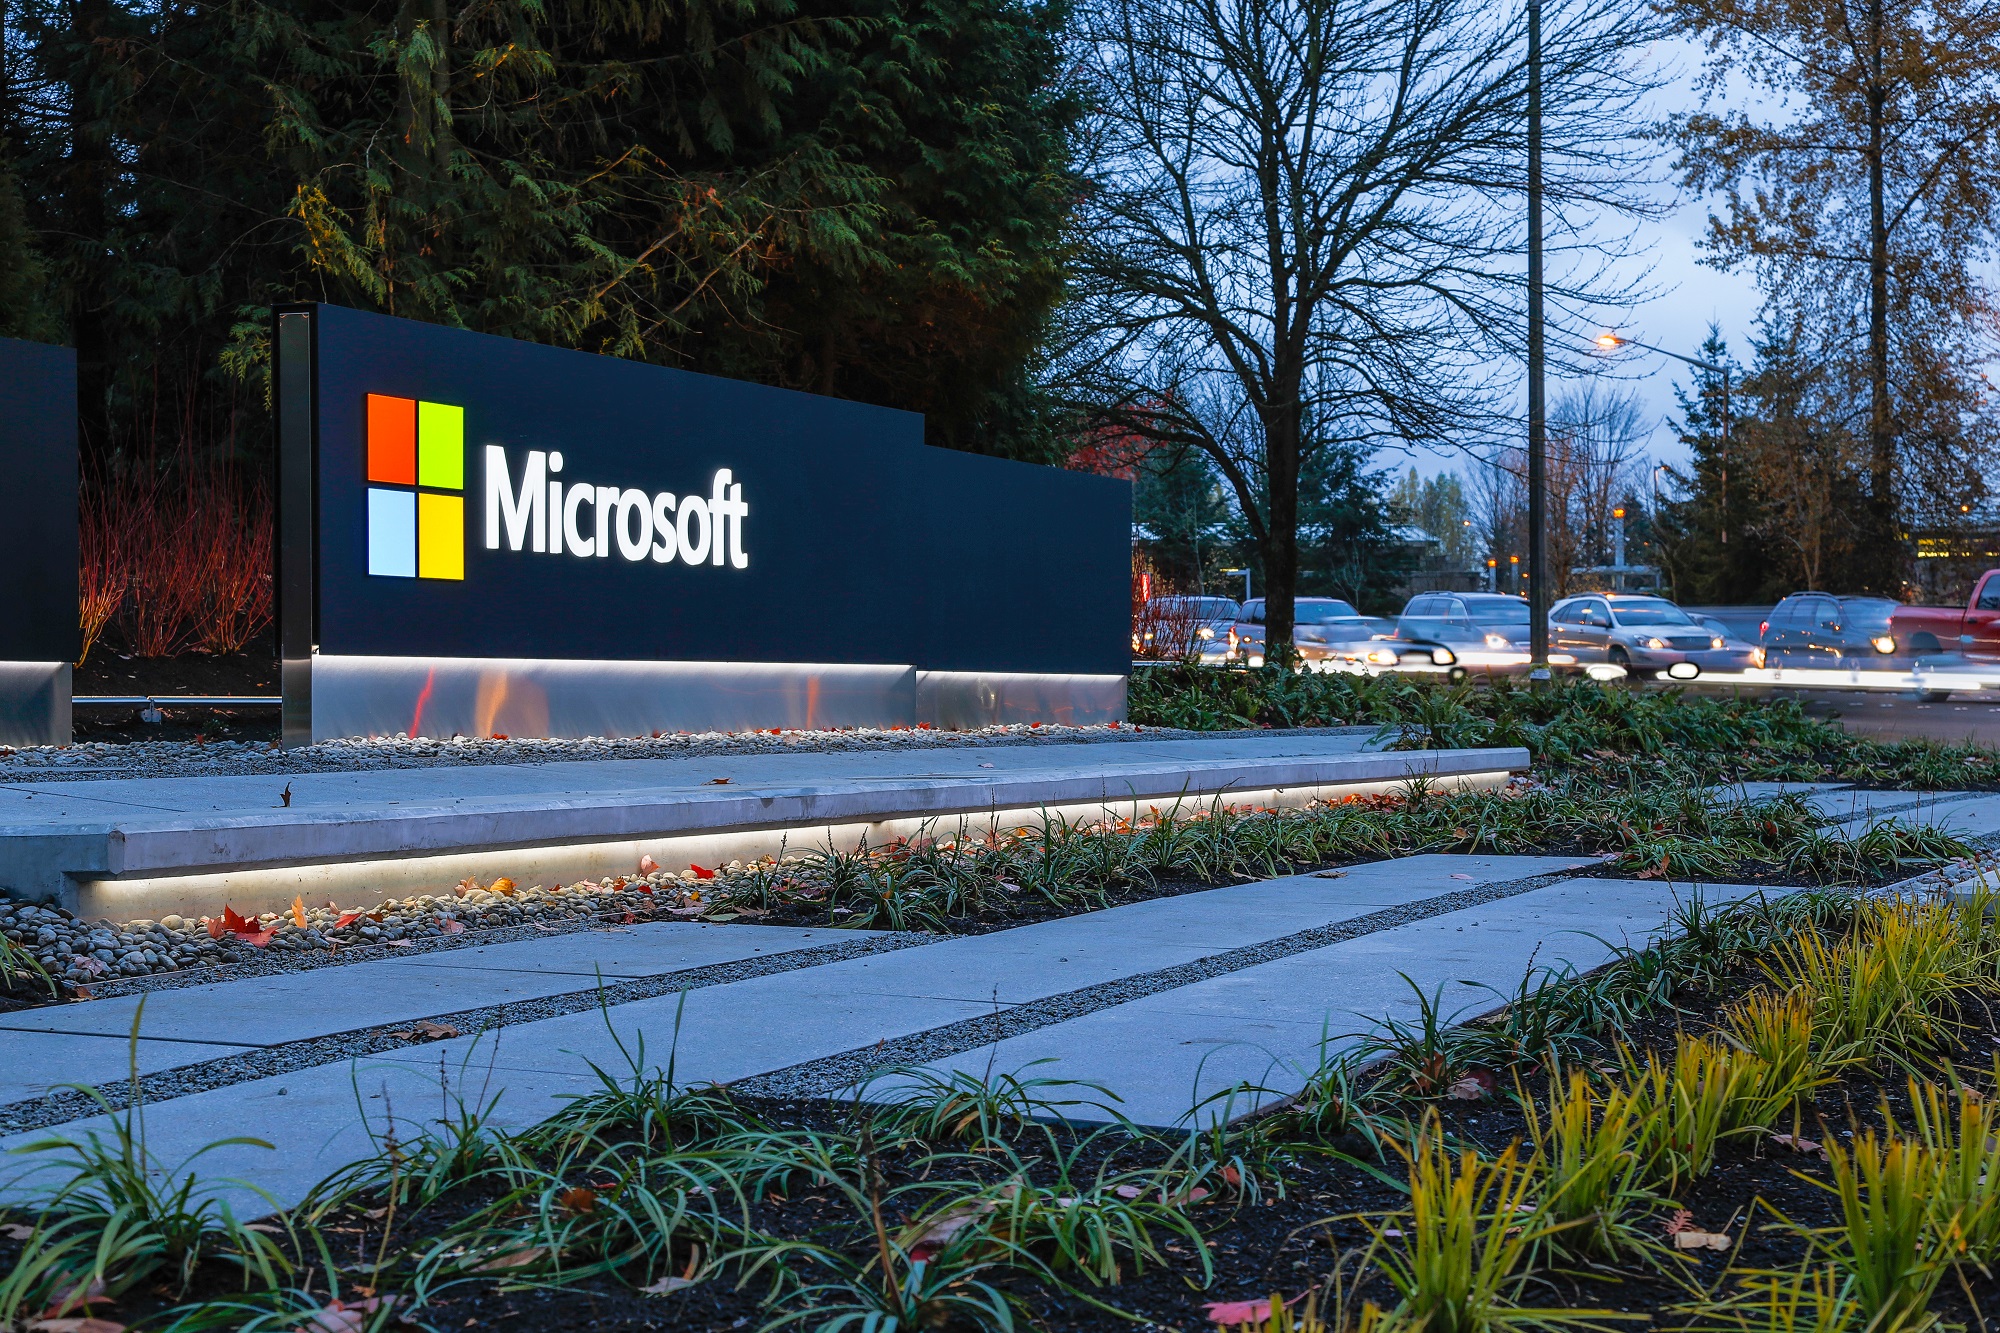 Photo of Microsoft sign outside.